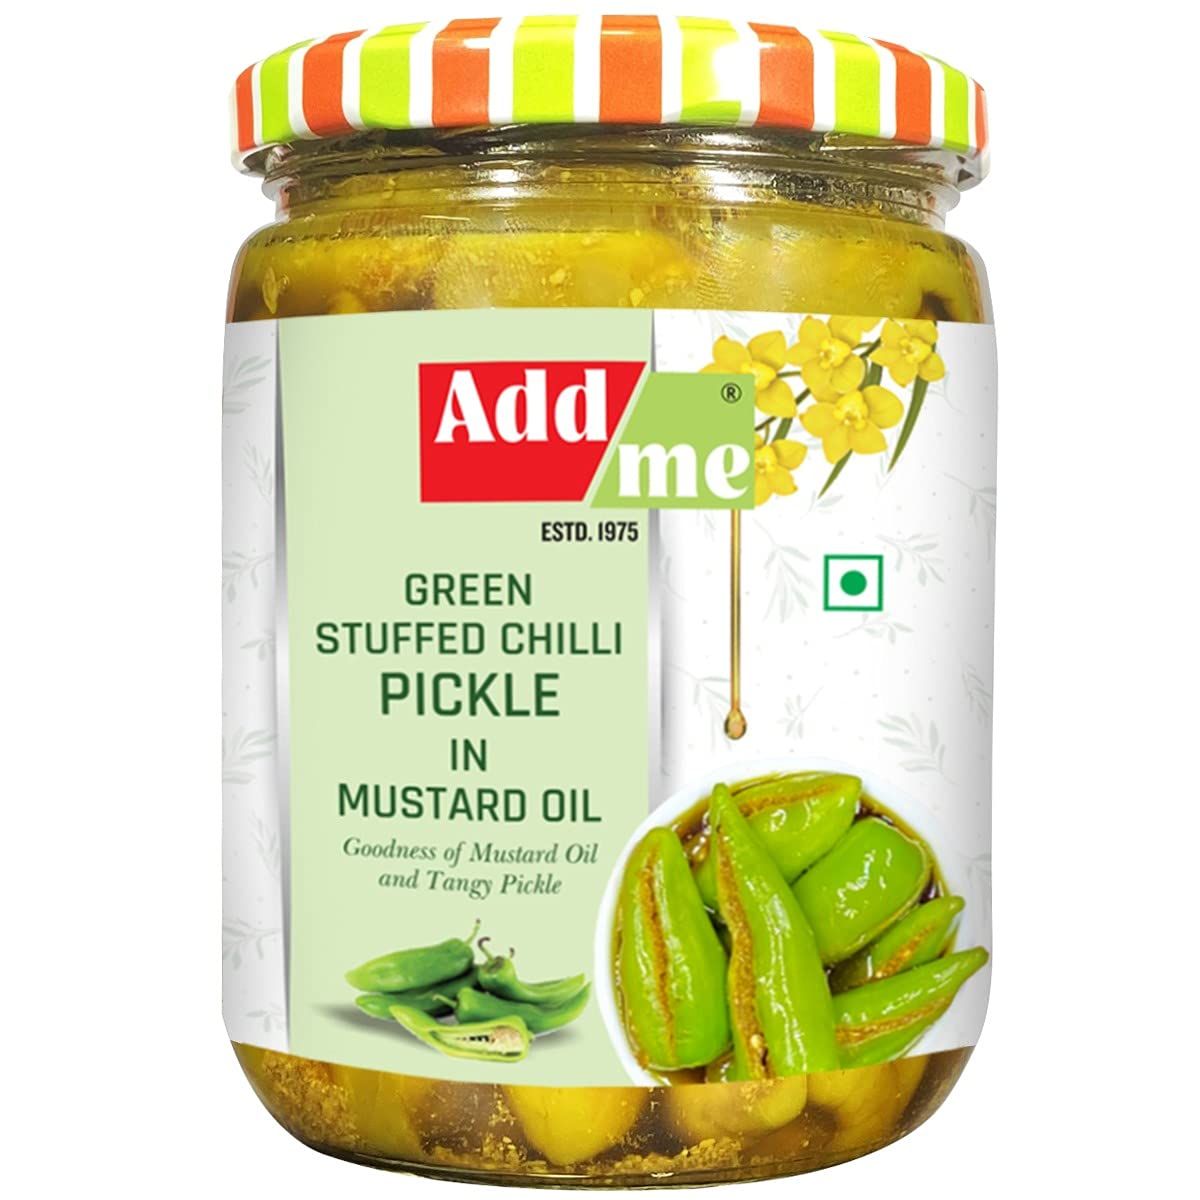 Add me Homemade Stuffed Green Chilli Pickle Image